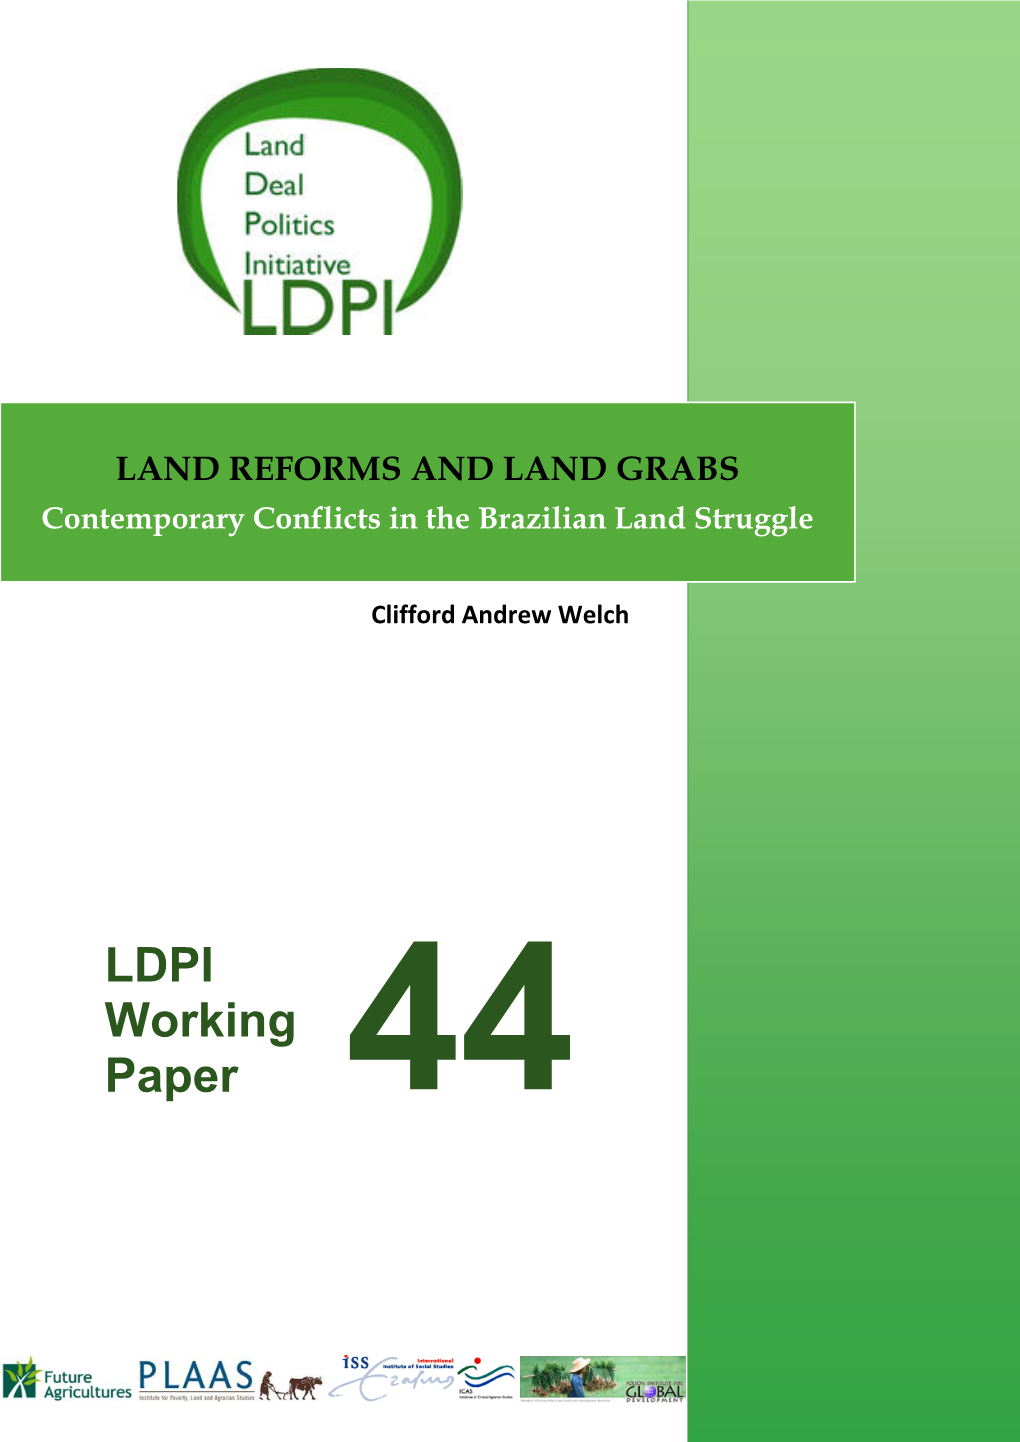 LDPI Working Paper 44